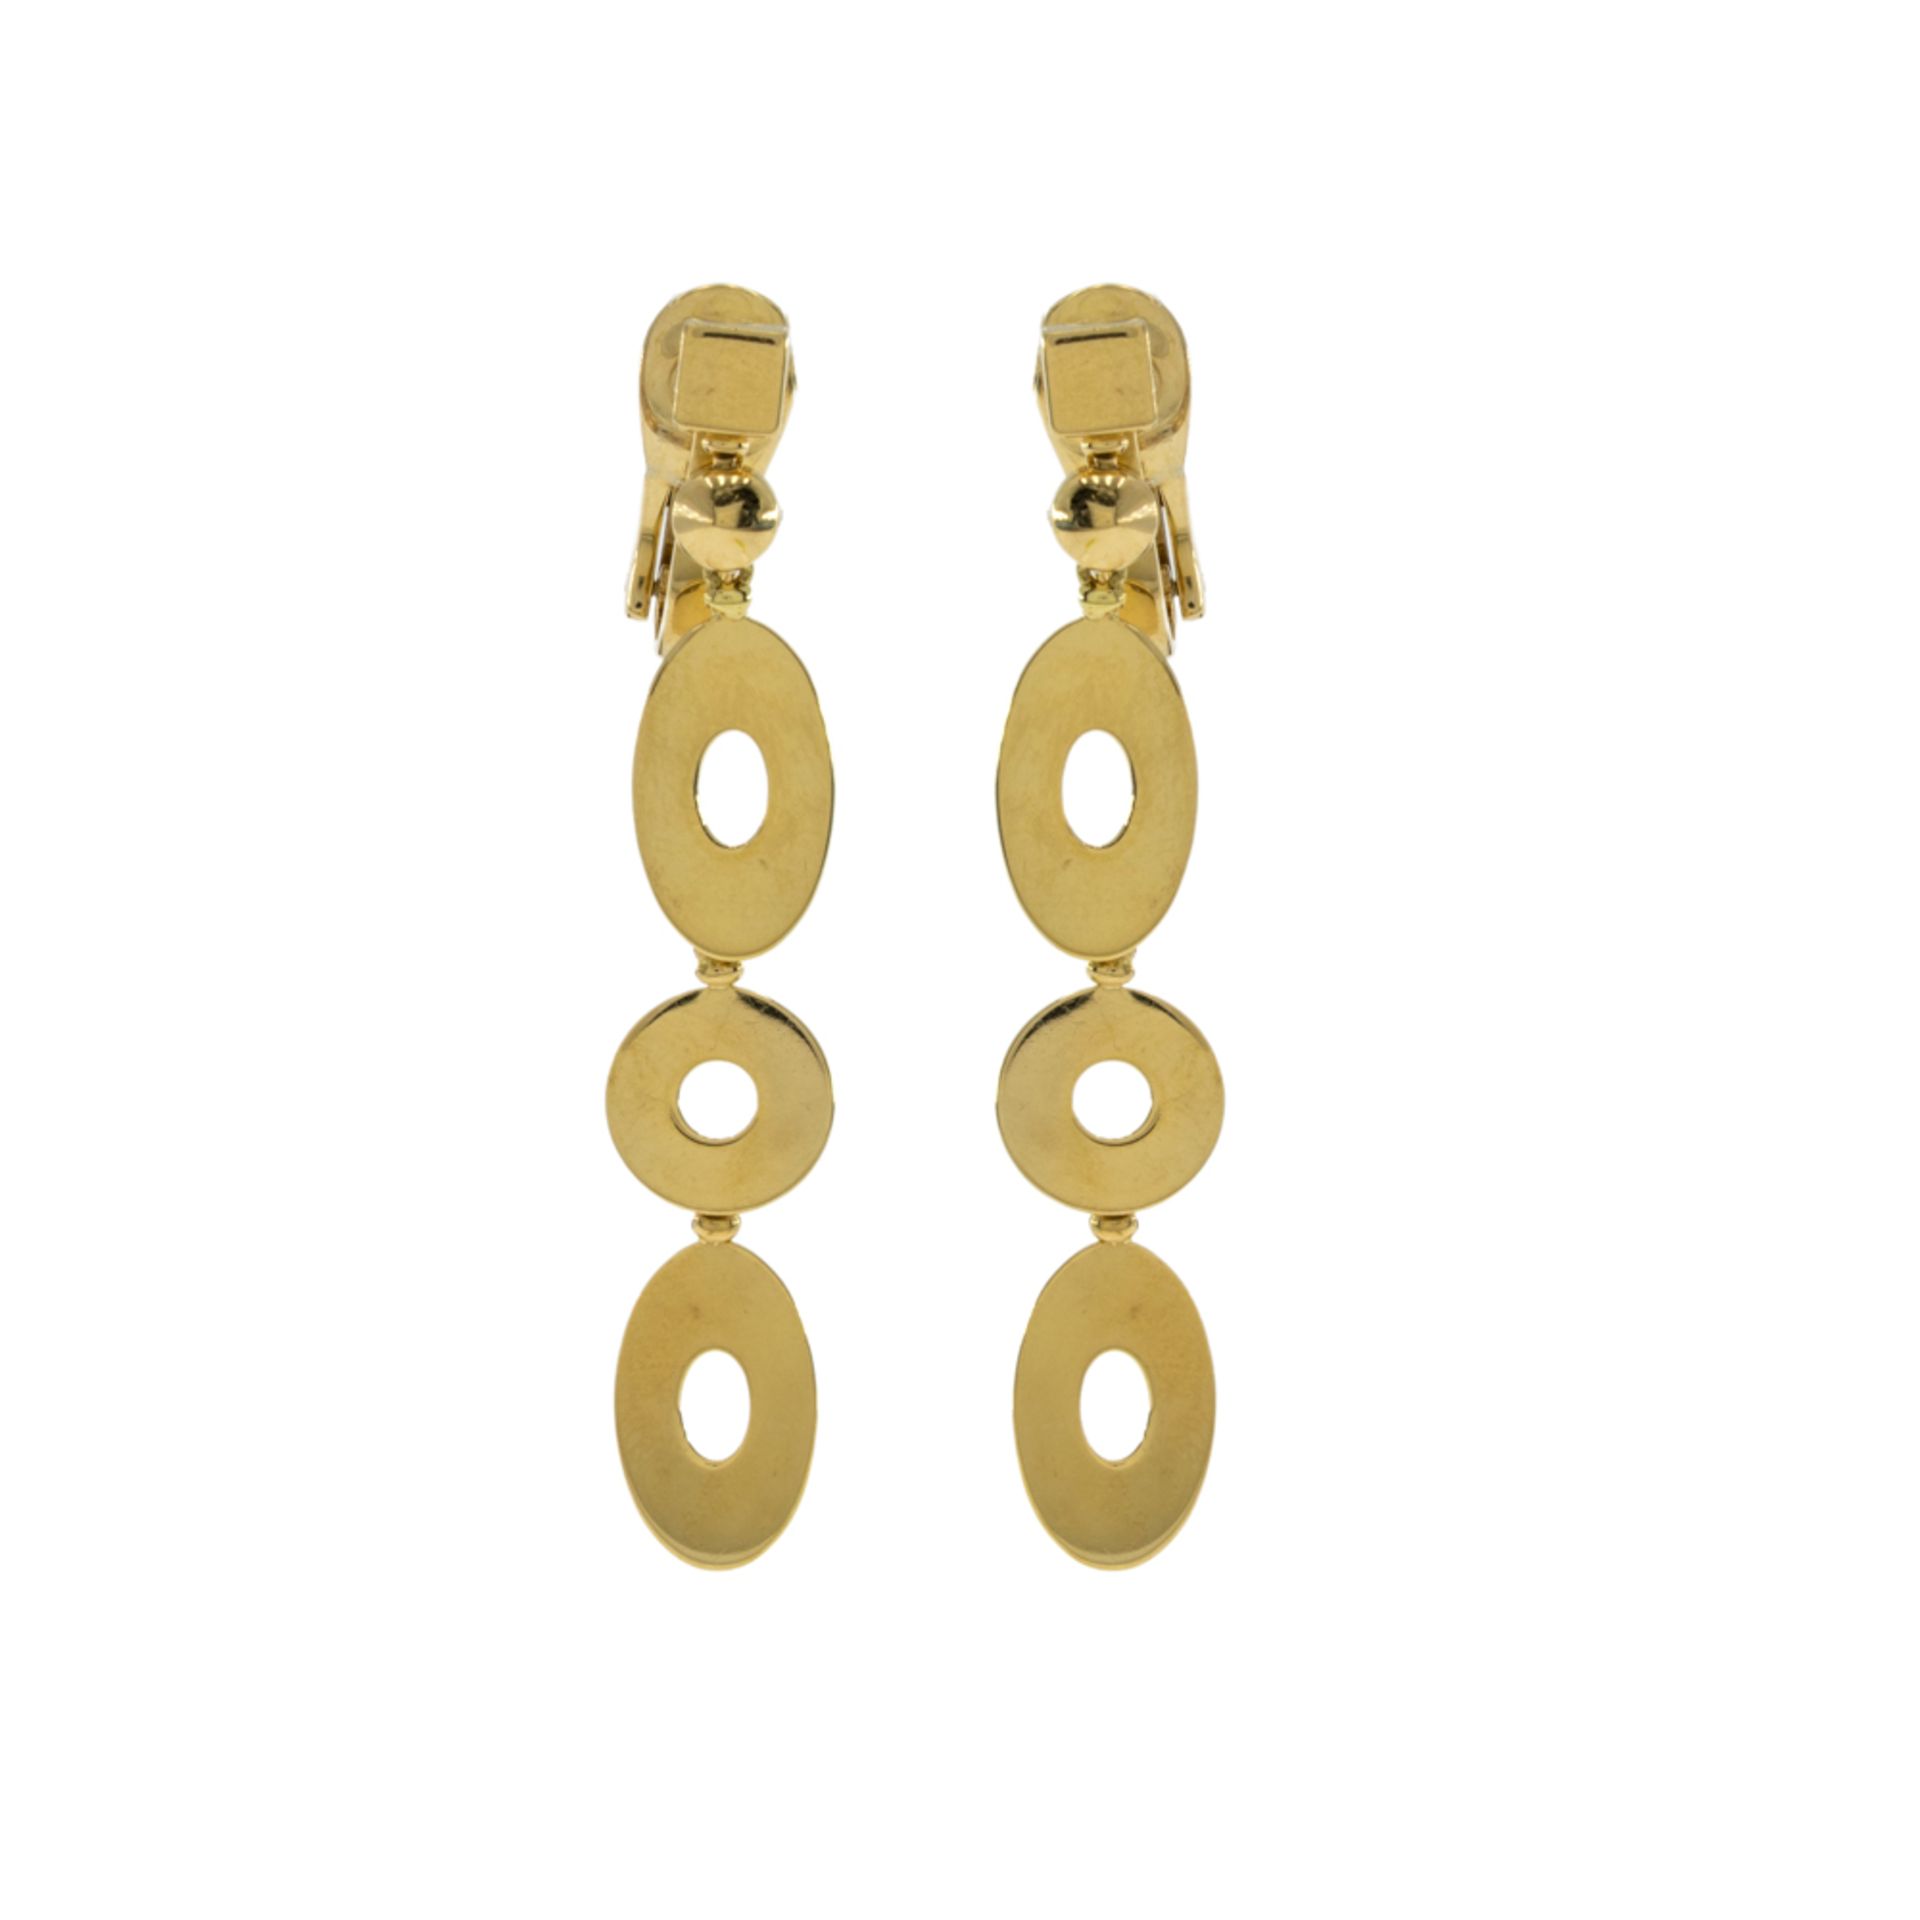 Bulgari Lucea collection pendant earrings